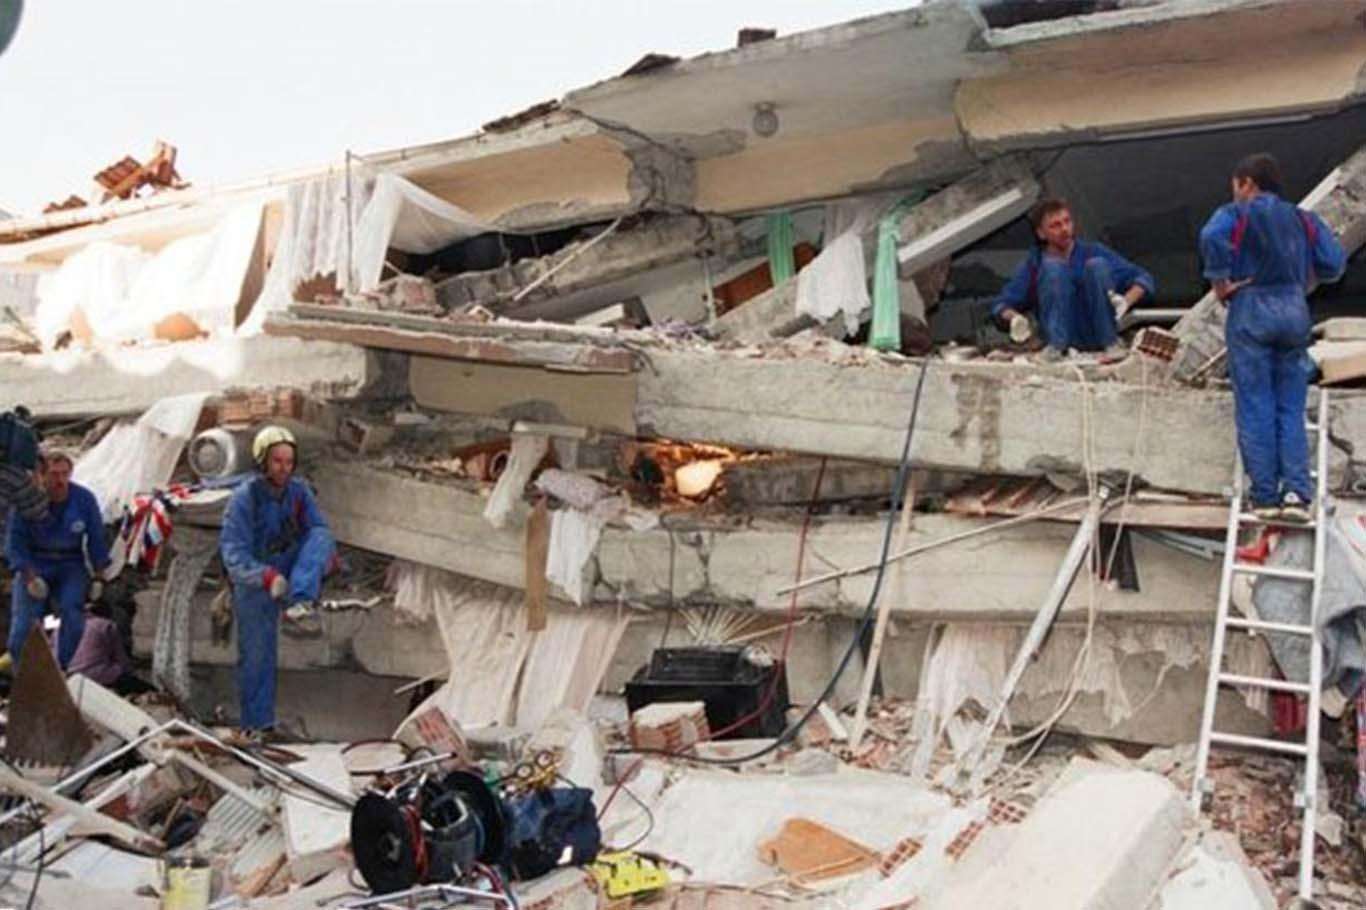 Today marks the 21st anniversary of Marmara Earthquake